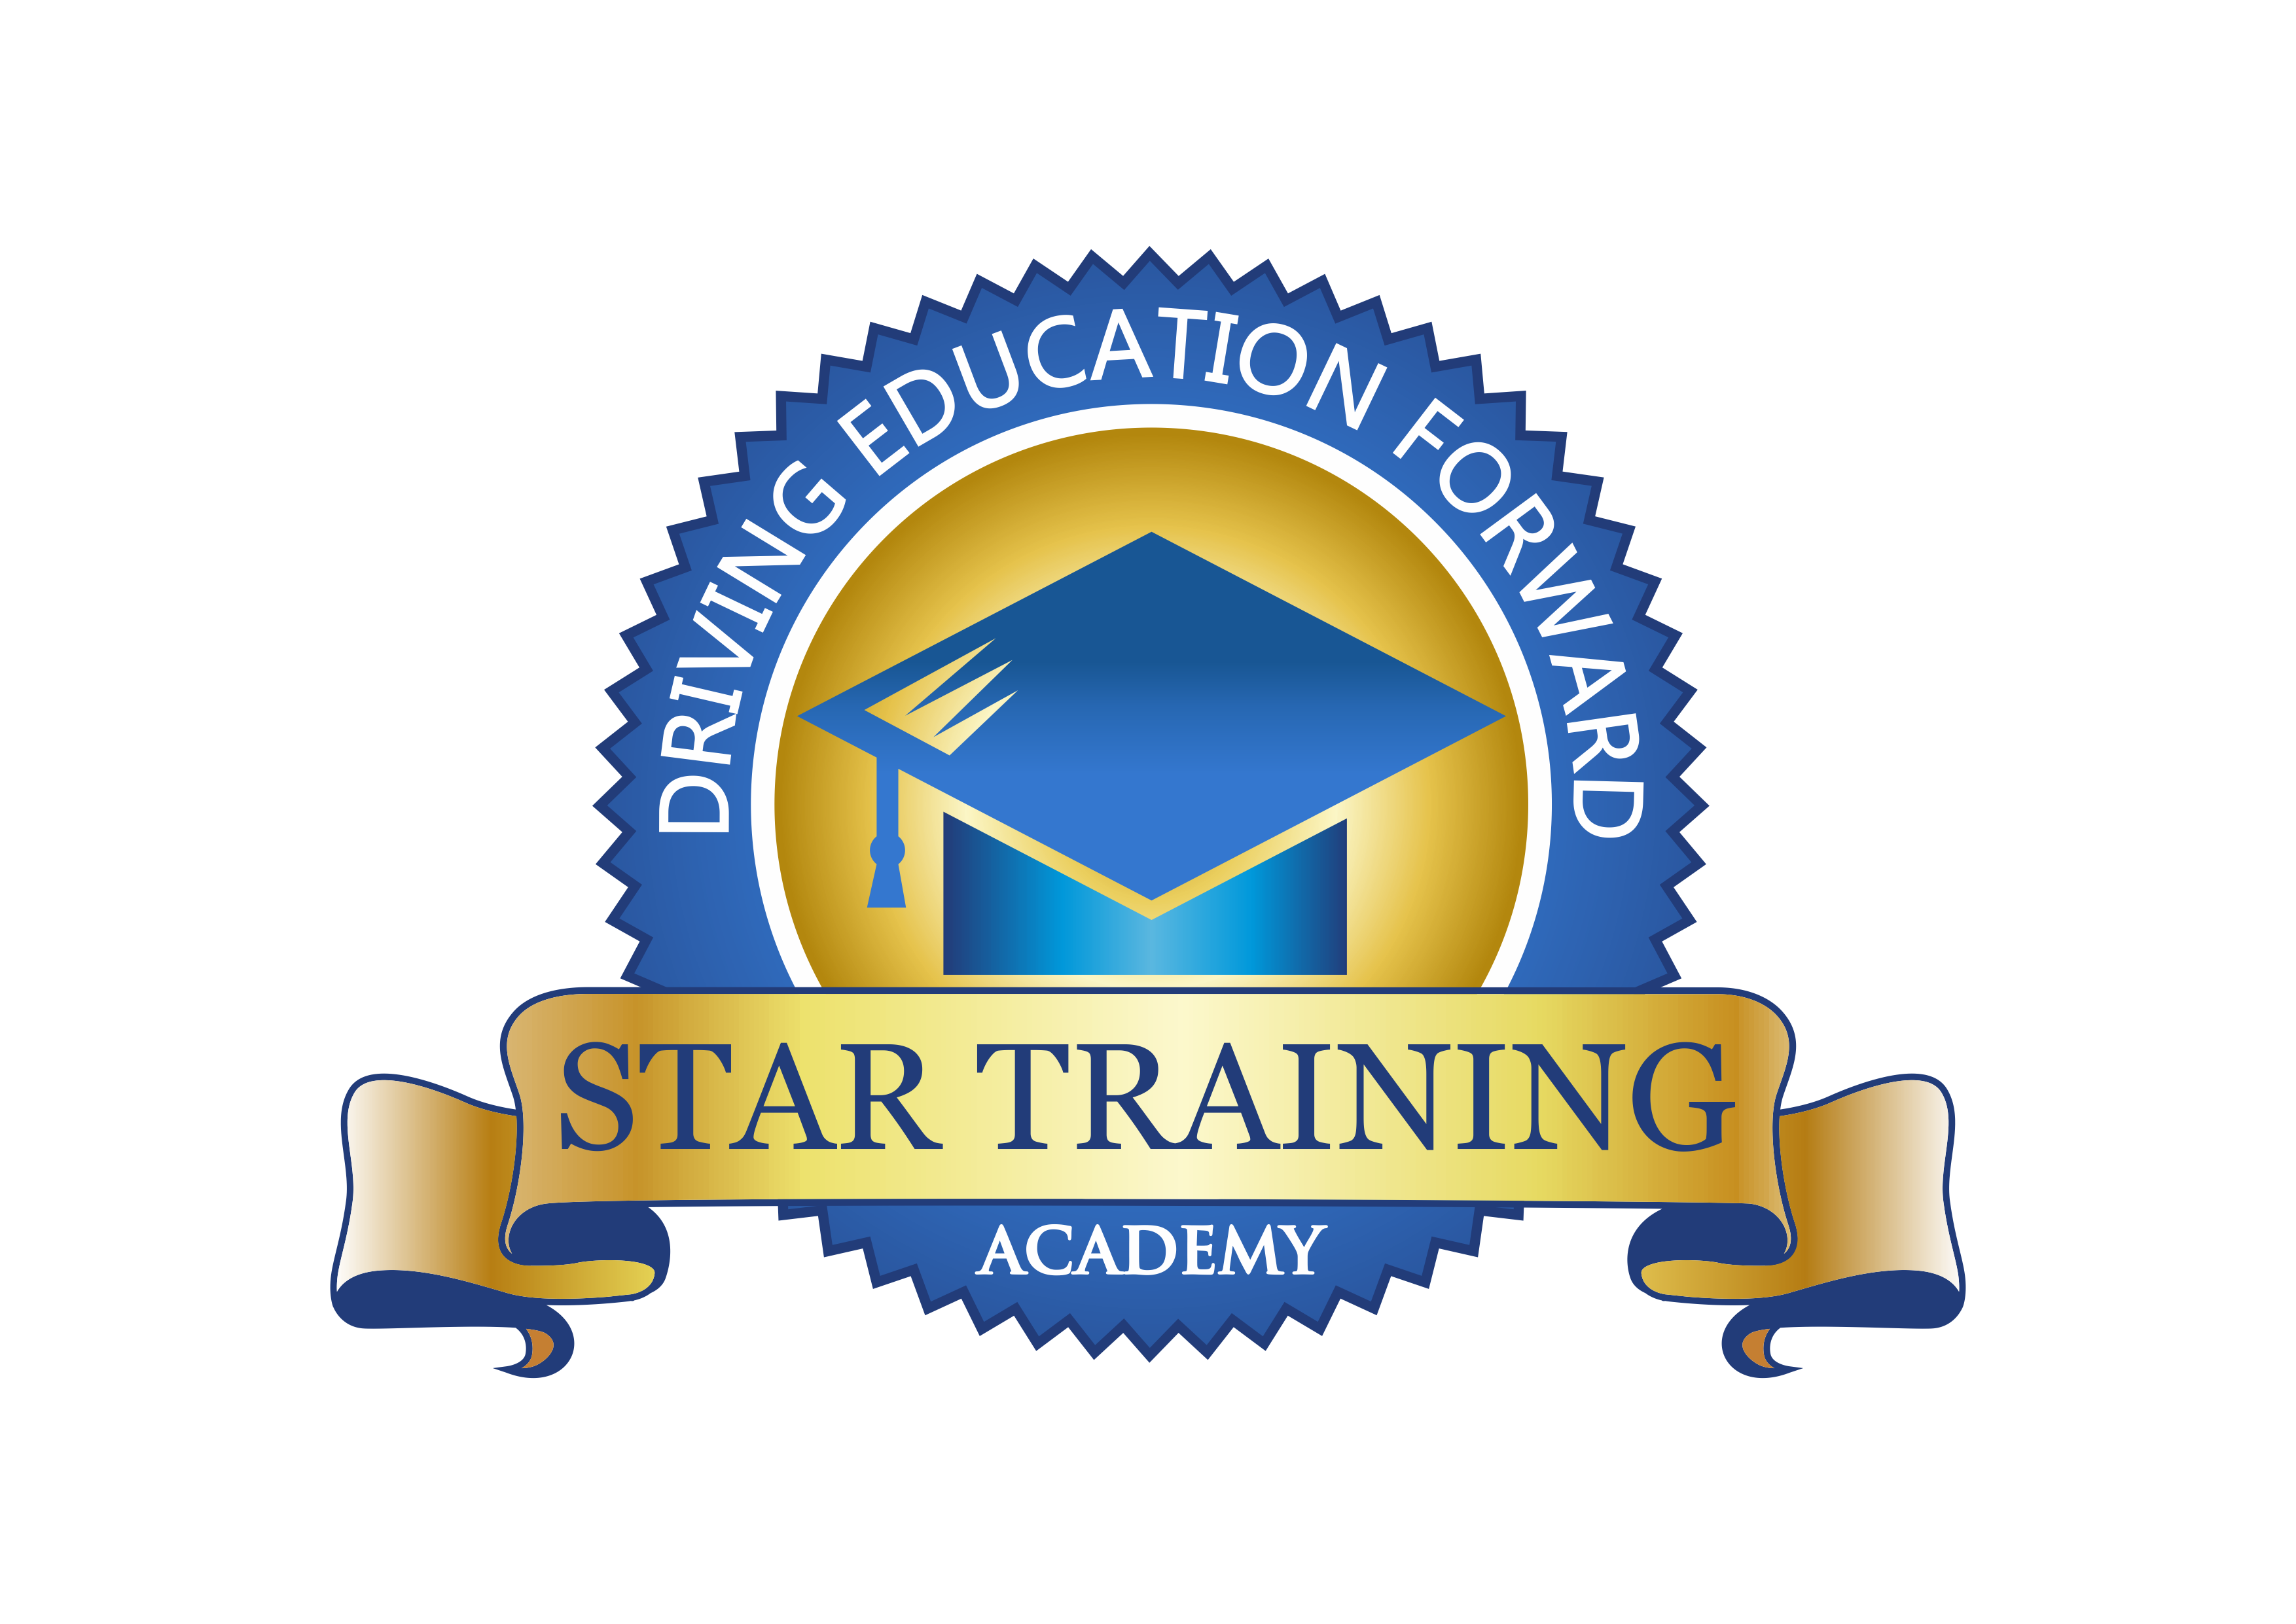 Star Training Academy